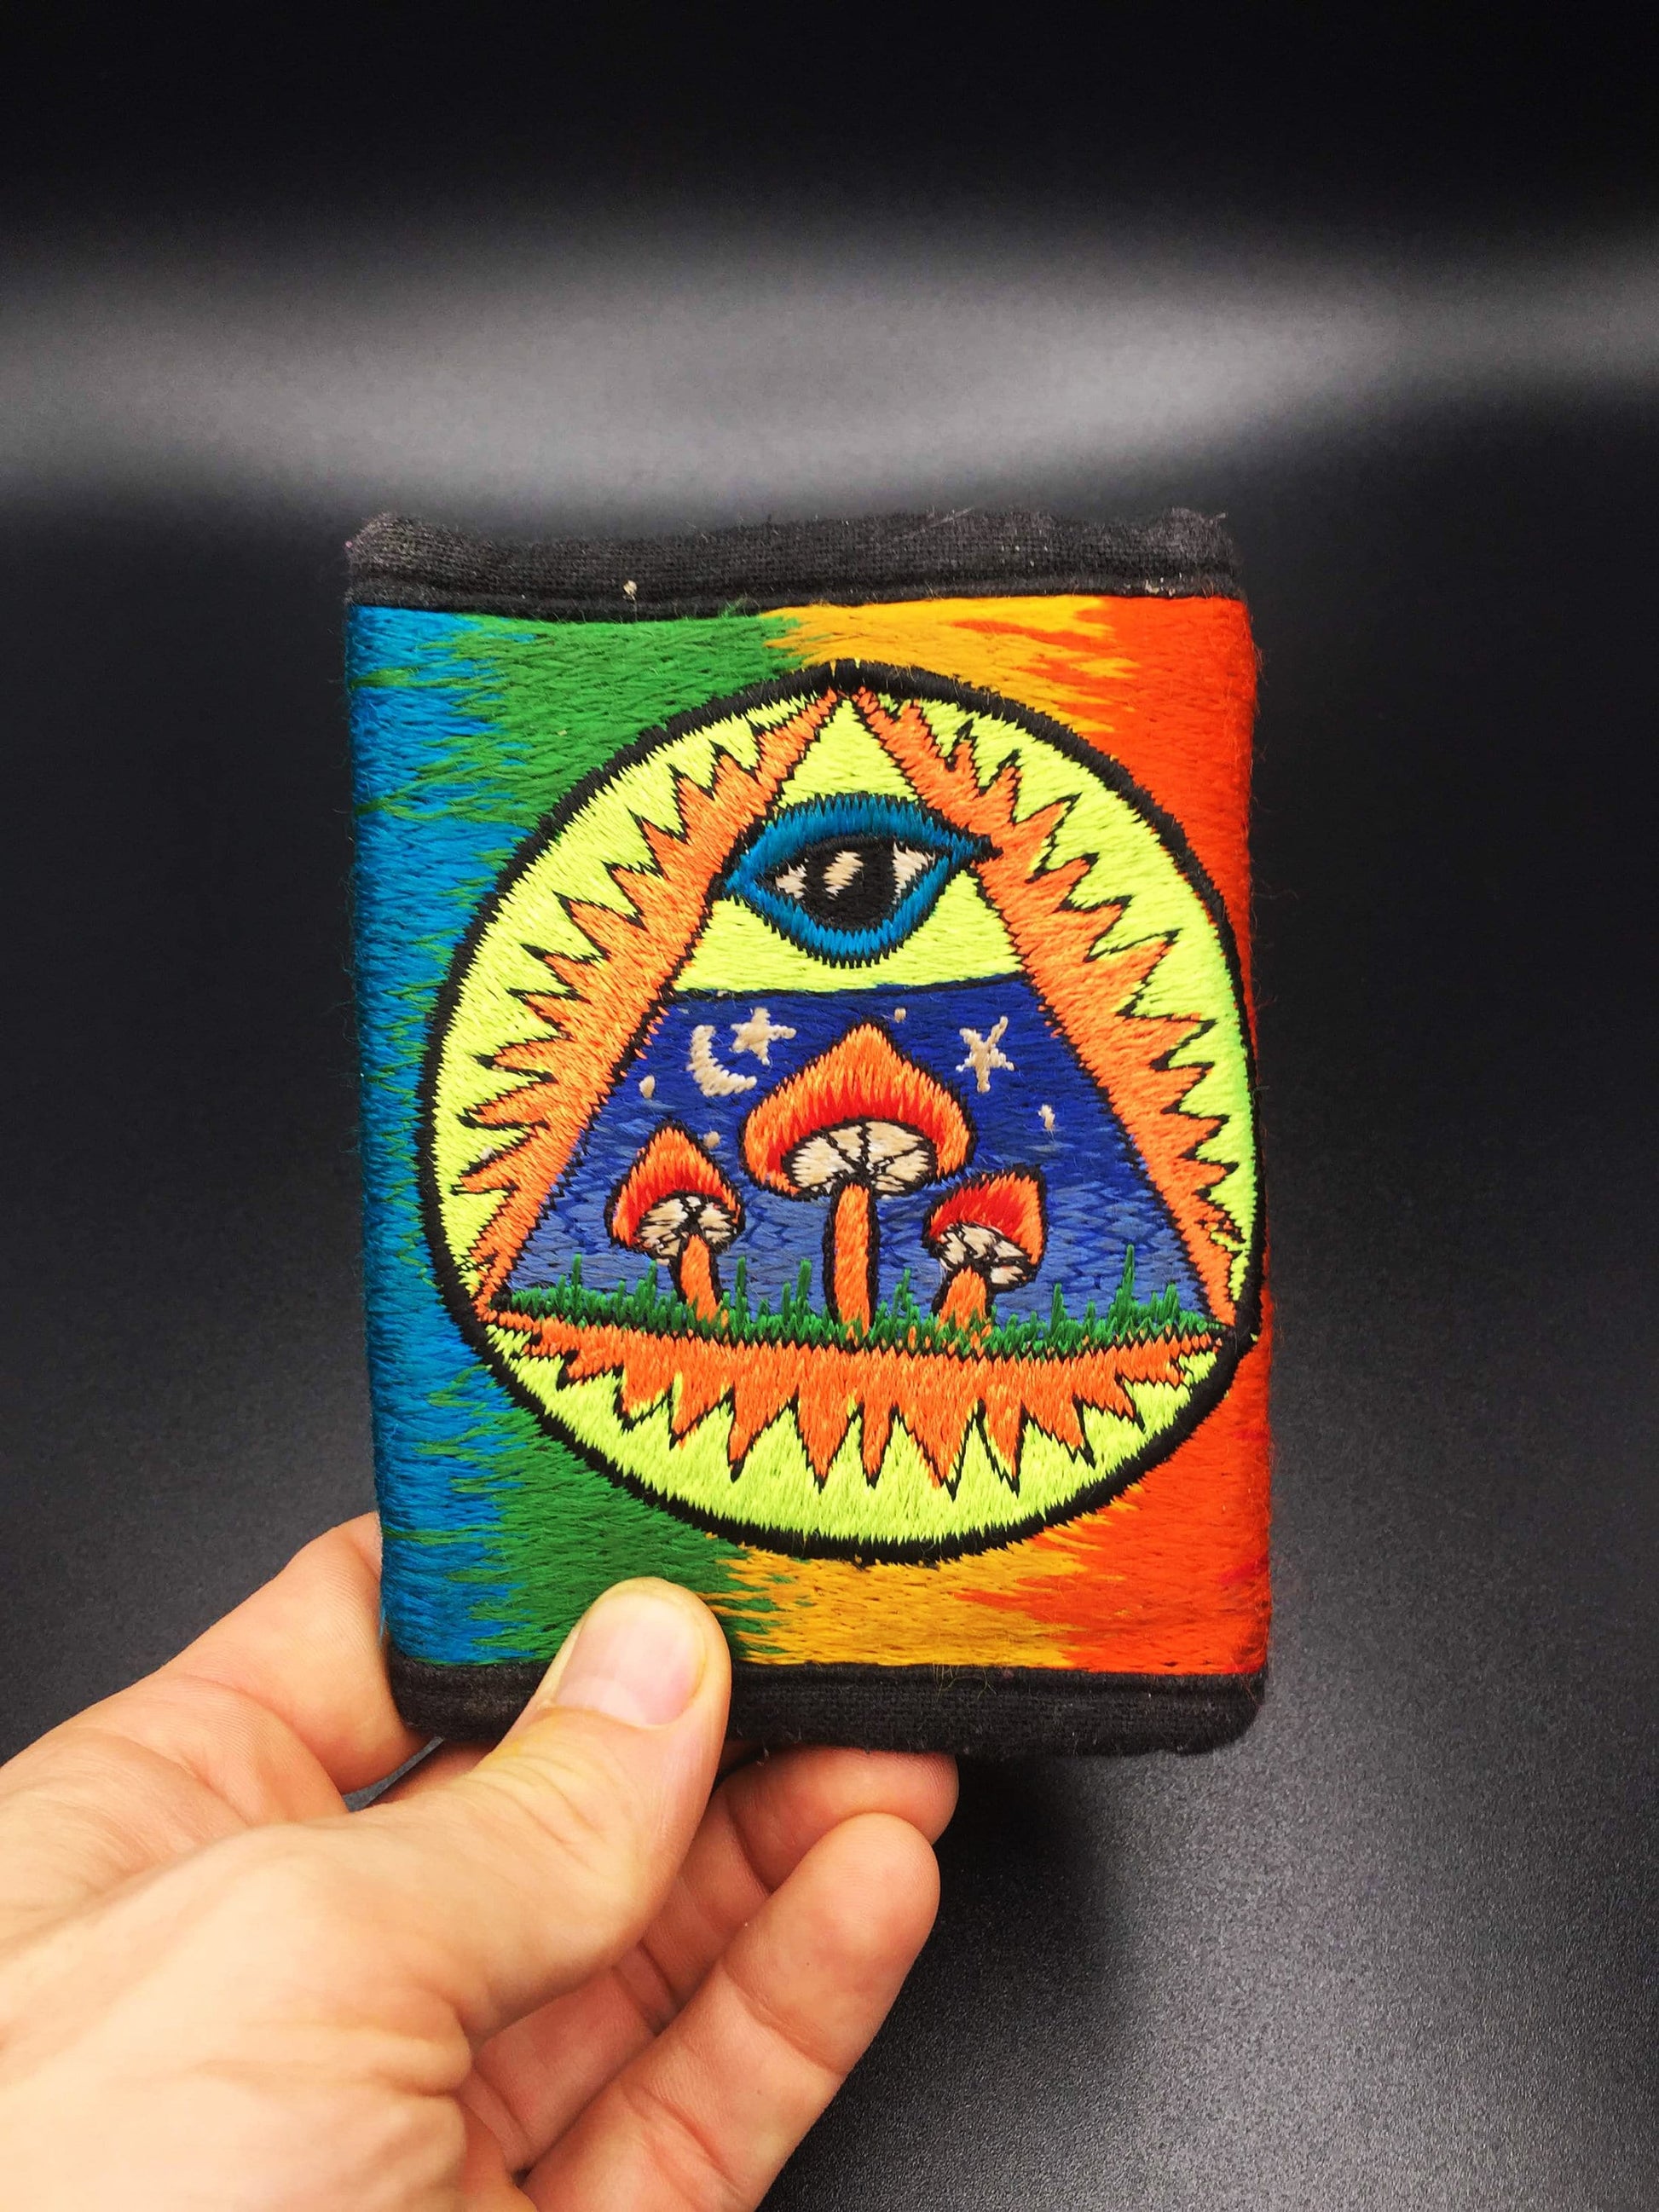 Illuminati Mushroom Wallet eye of consciousness - blacklight glowing pocket for coins and cards and 2 for papermoney hook & loop illuminati